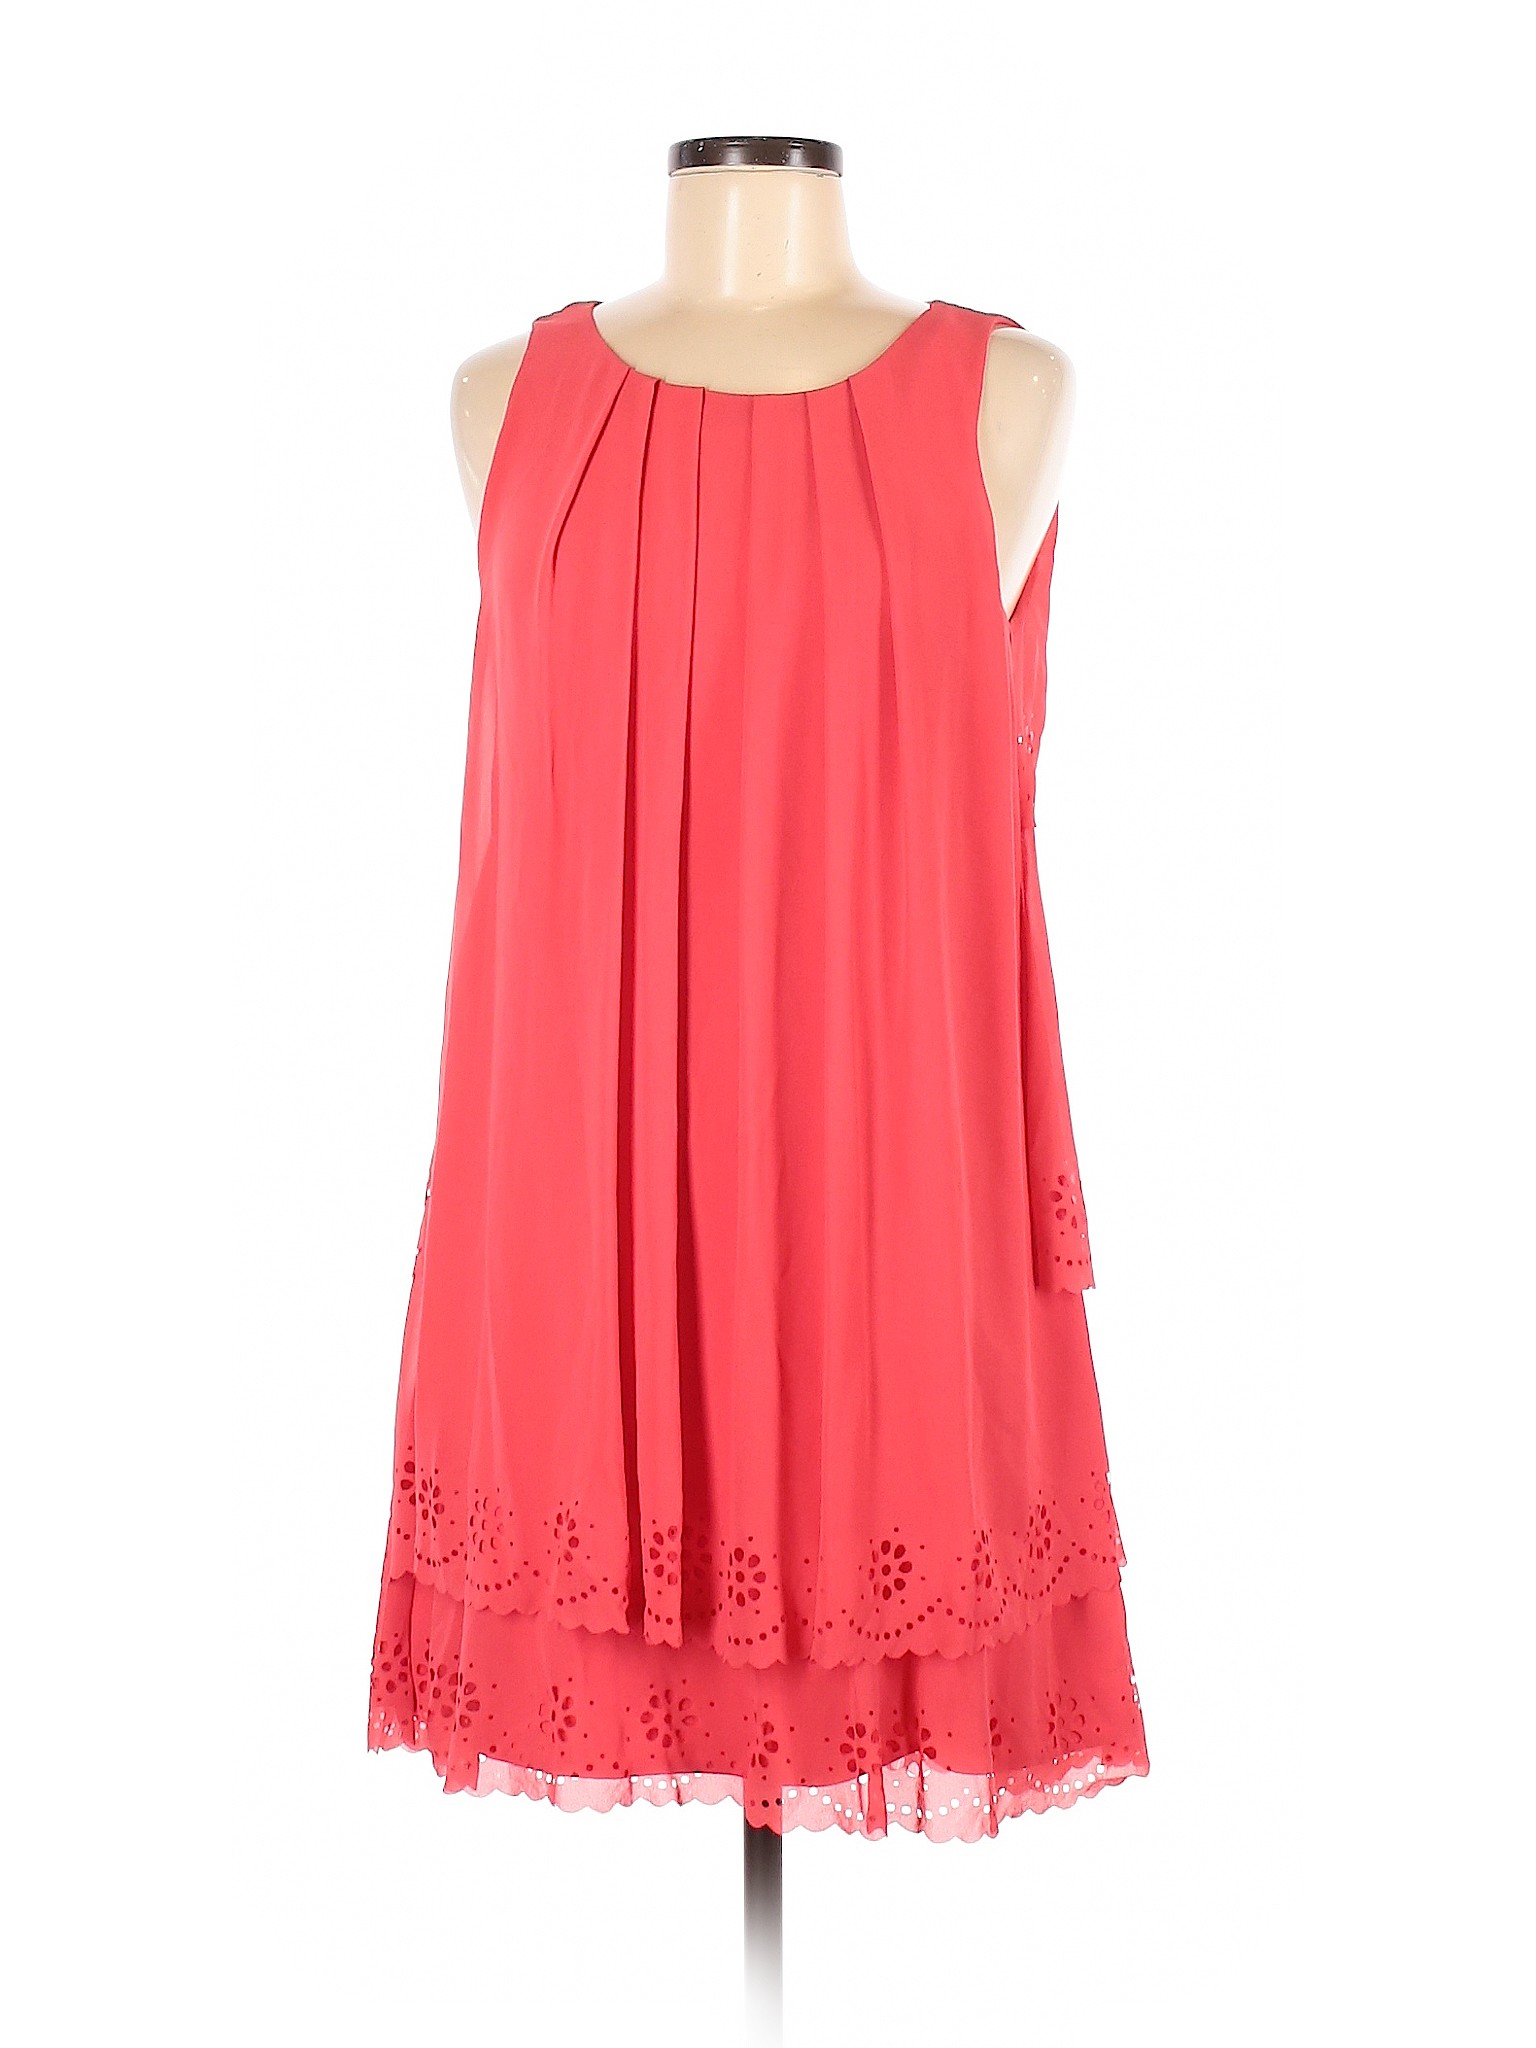 Jessica Simpson Women Pink Casual Dress 6 | eBay